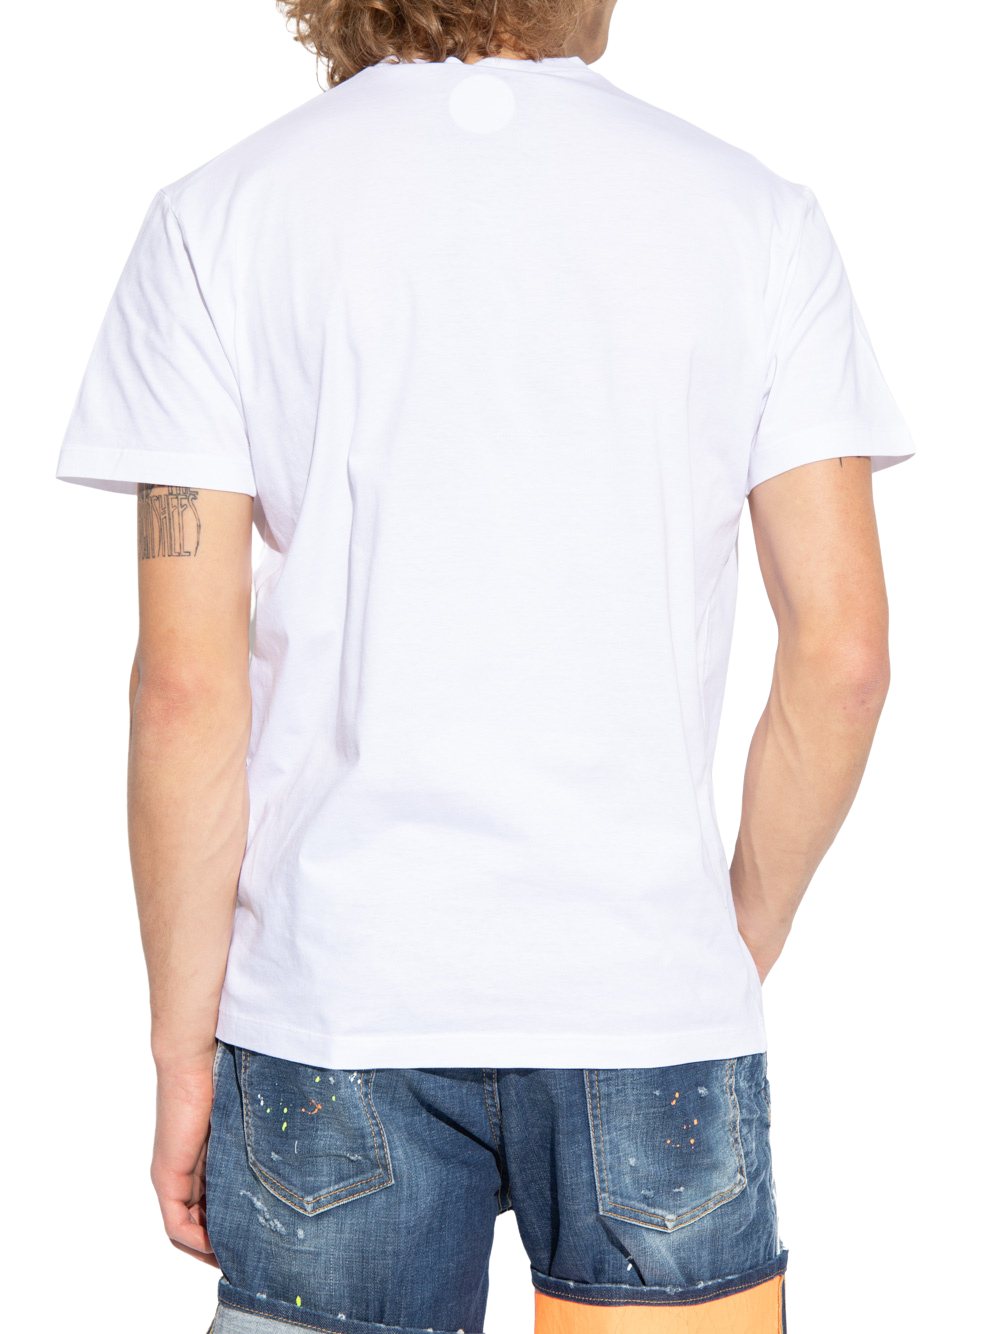 Dsquared2 T-Shirt